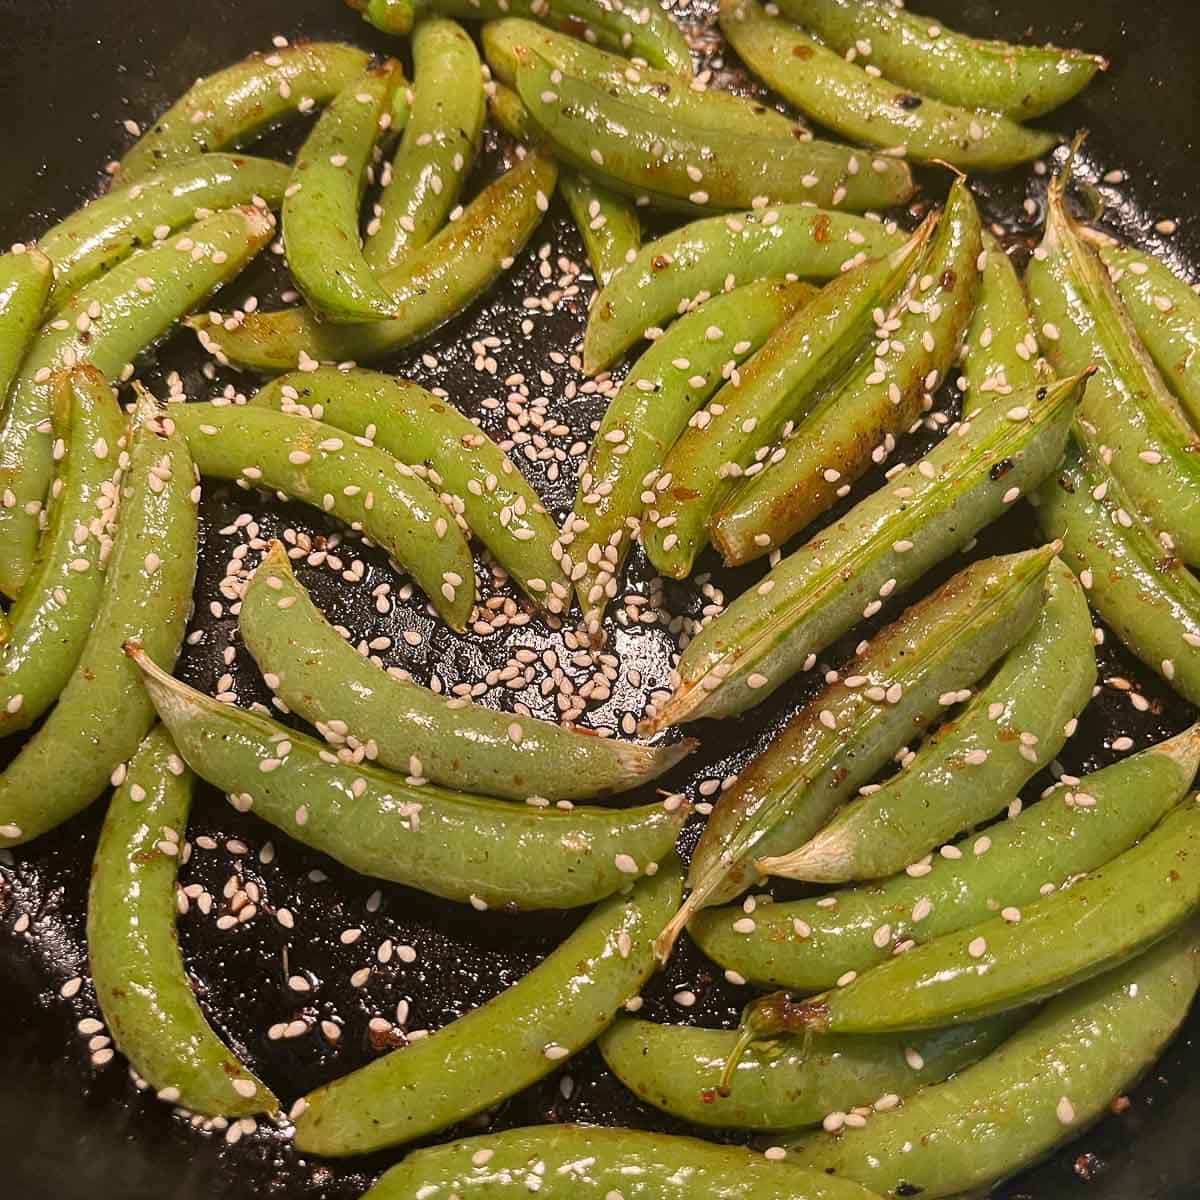 snap peas seasoned with sesame seeds